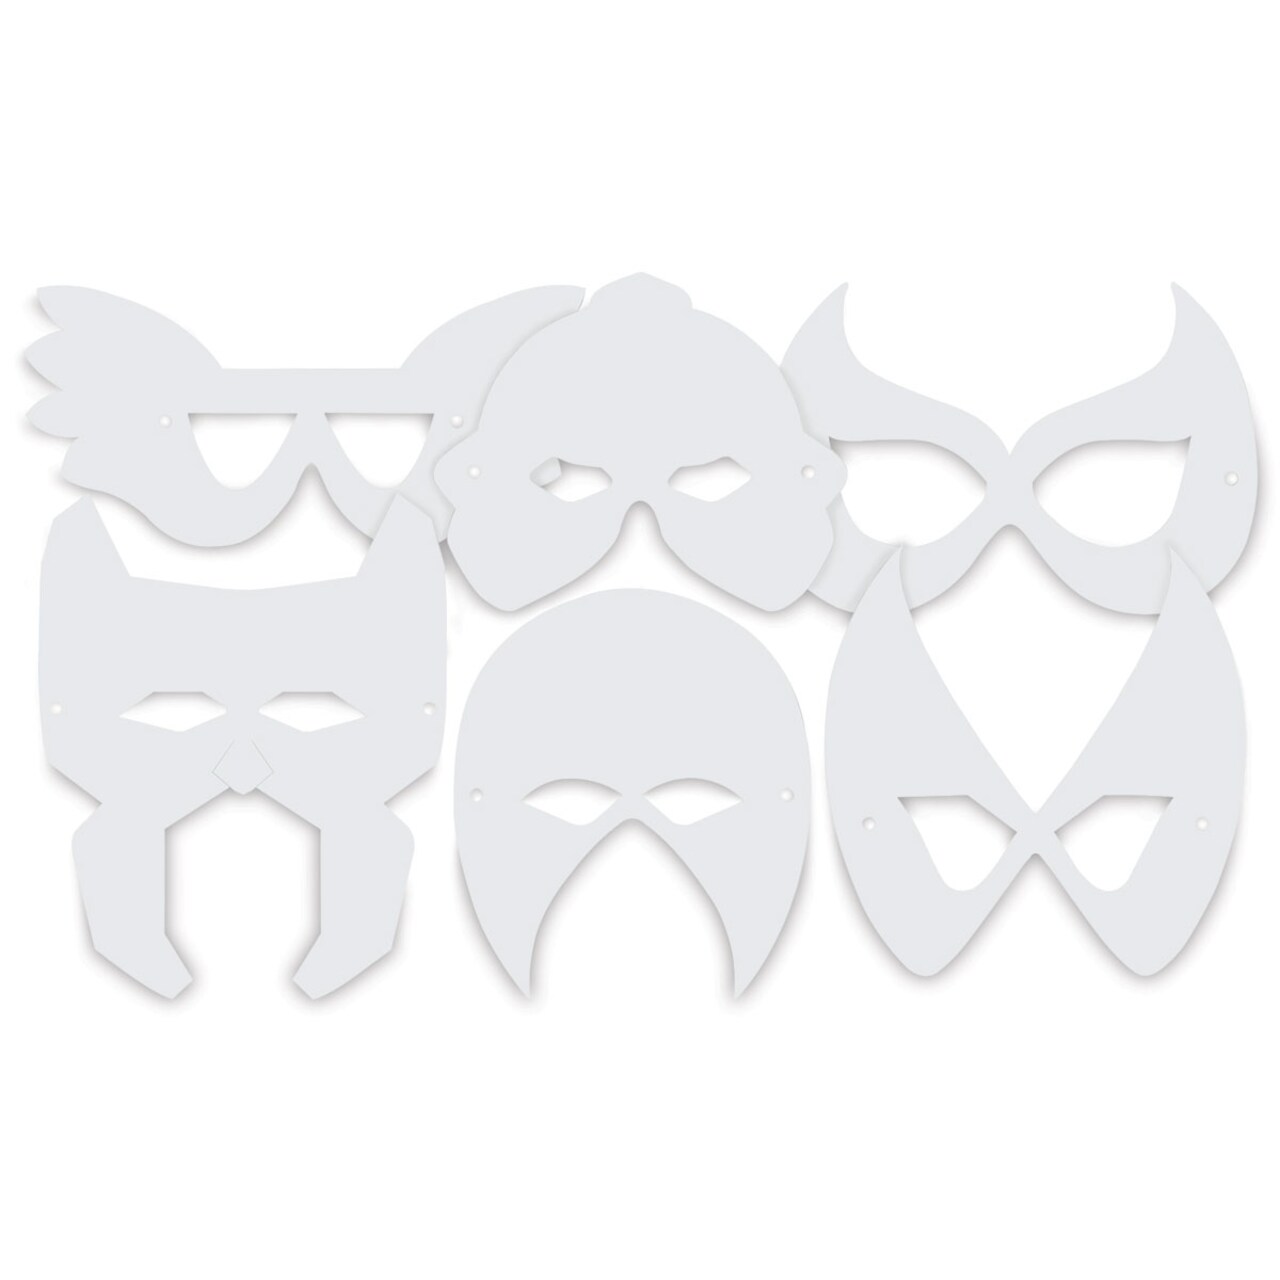 Roylco Super Hero Masks - Package of 24